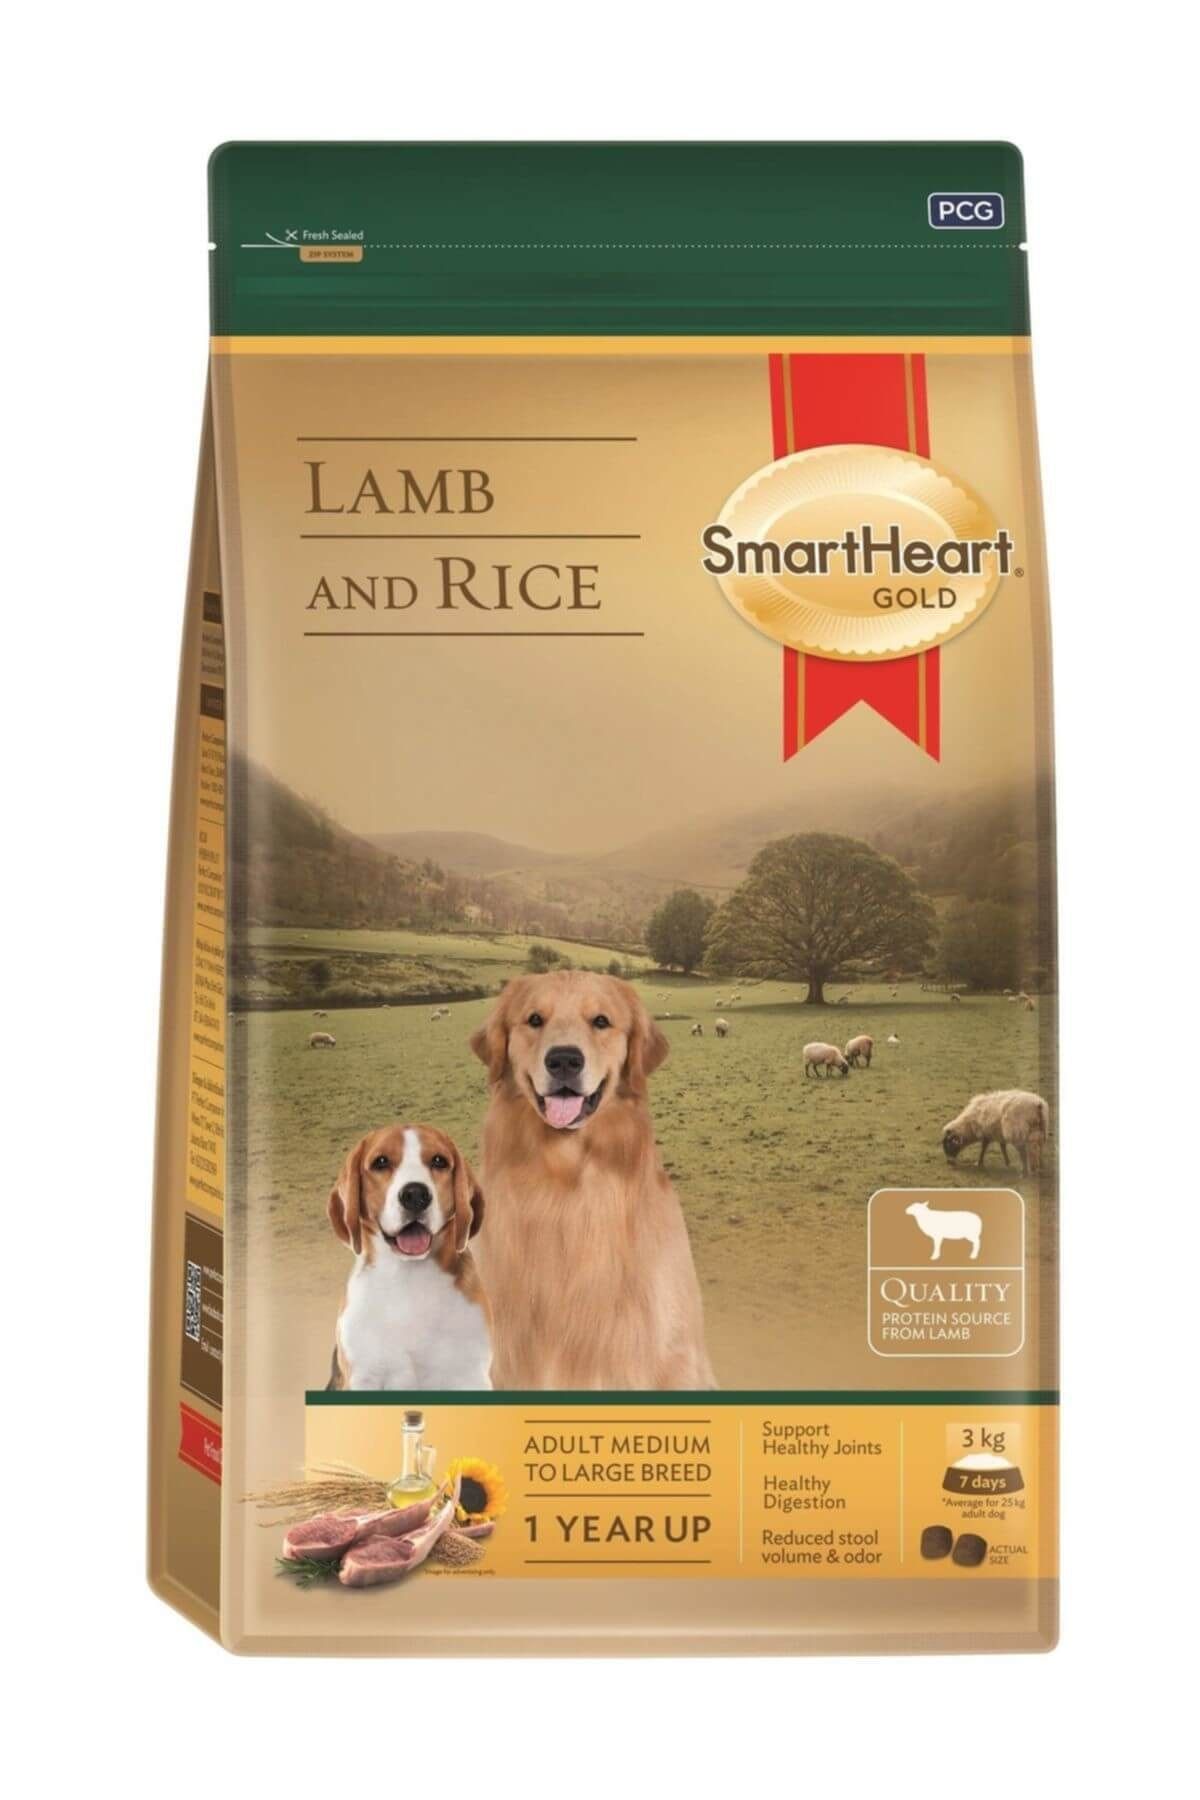 Корма gold. Смарт Харт корм для собак. Smart Heart Gold корм для собак. Смарт Харт корм для собак щенков. Lamb Rice корм для собак.